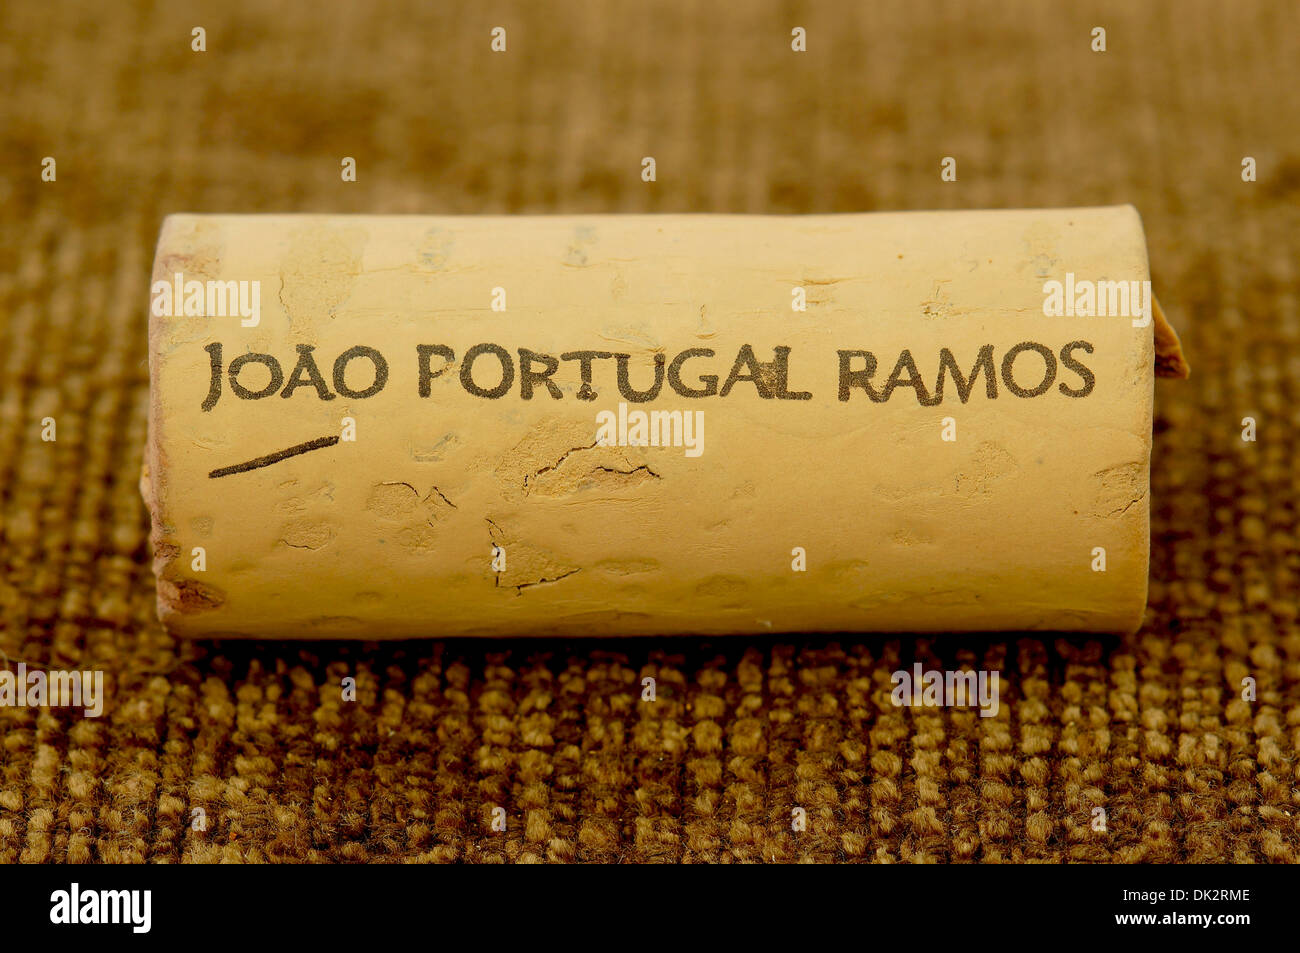 Joao Portugal Ramos portugese winemaker wine cork stopper Stock Photo